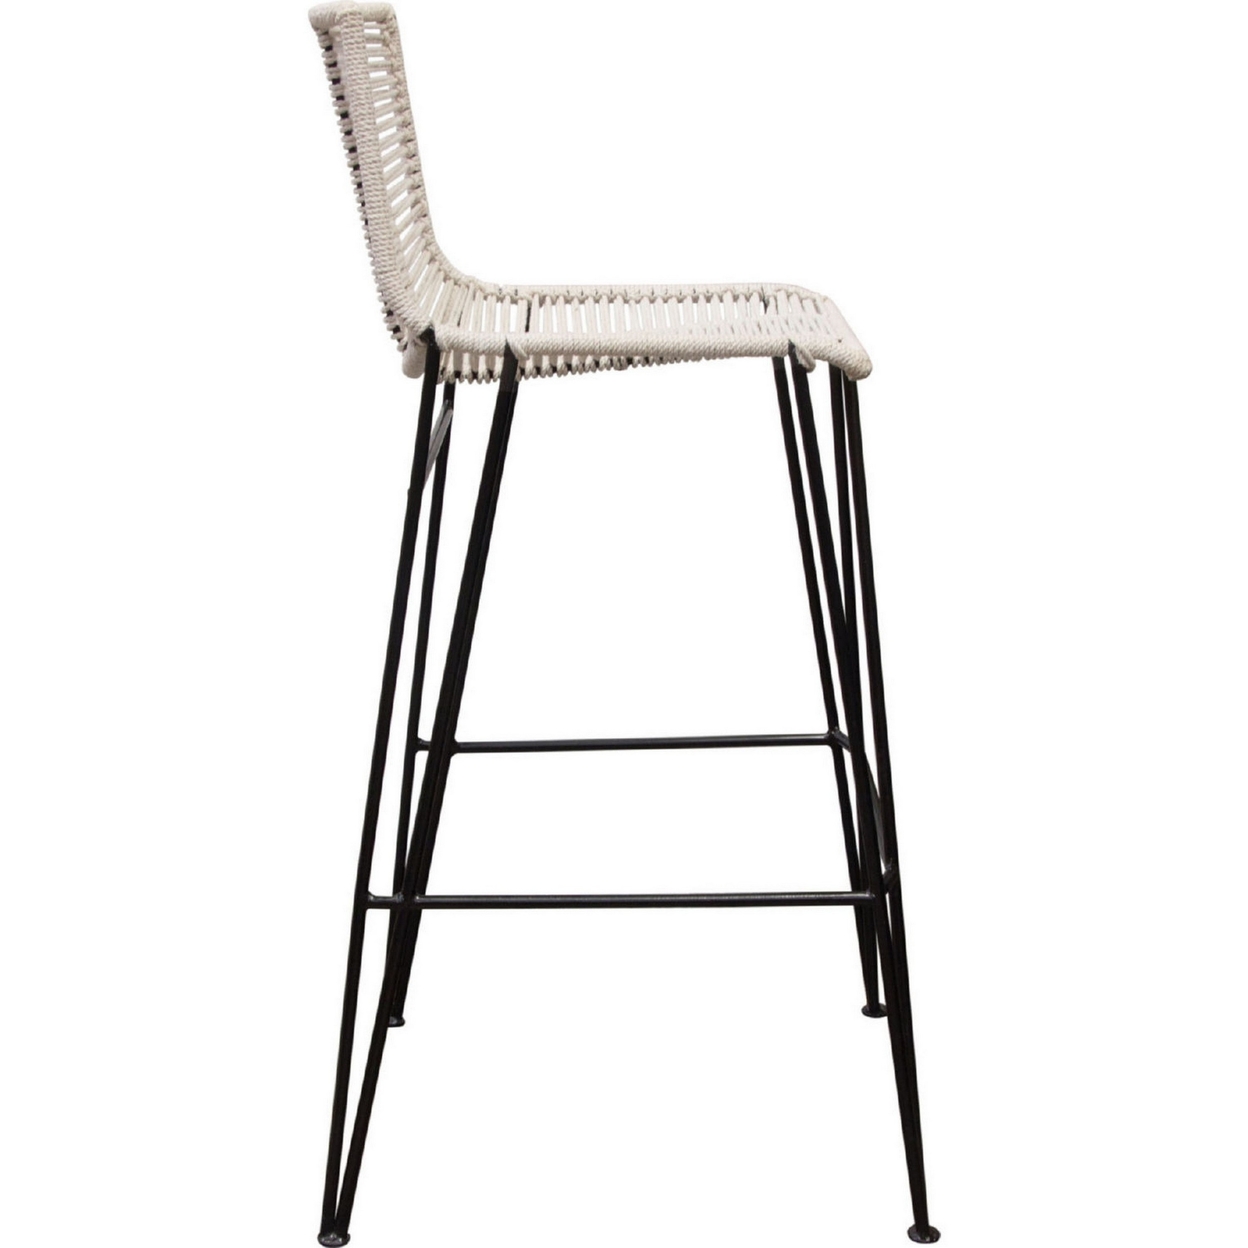 40 Inch Set Of 2 Barstool Chairs, Black Metal Frames, White Cotton Rope- Saltoro Sherpi